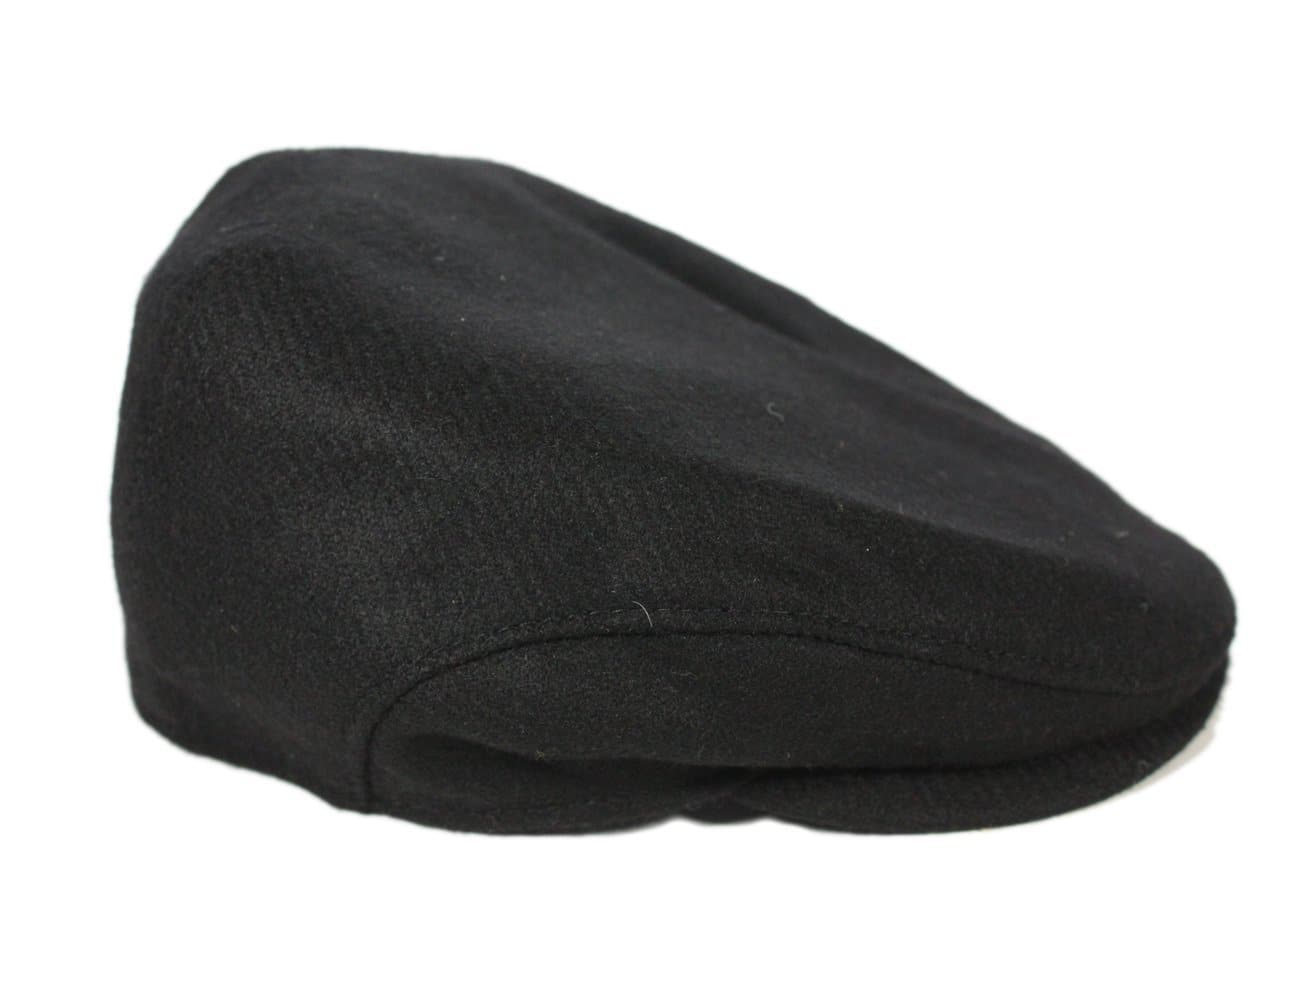 Hats with Ear Flaps - Wool & Tweed Hats for Men & Women